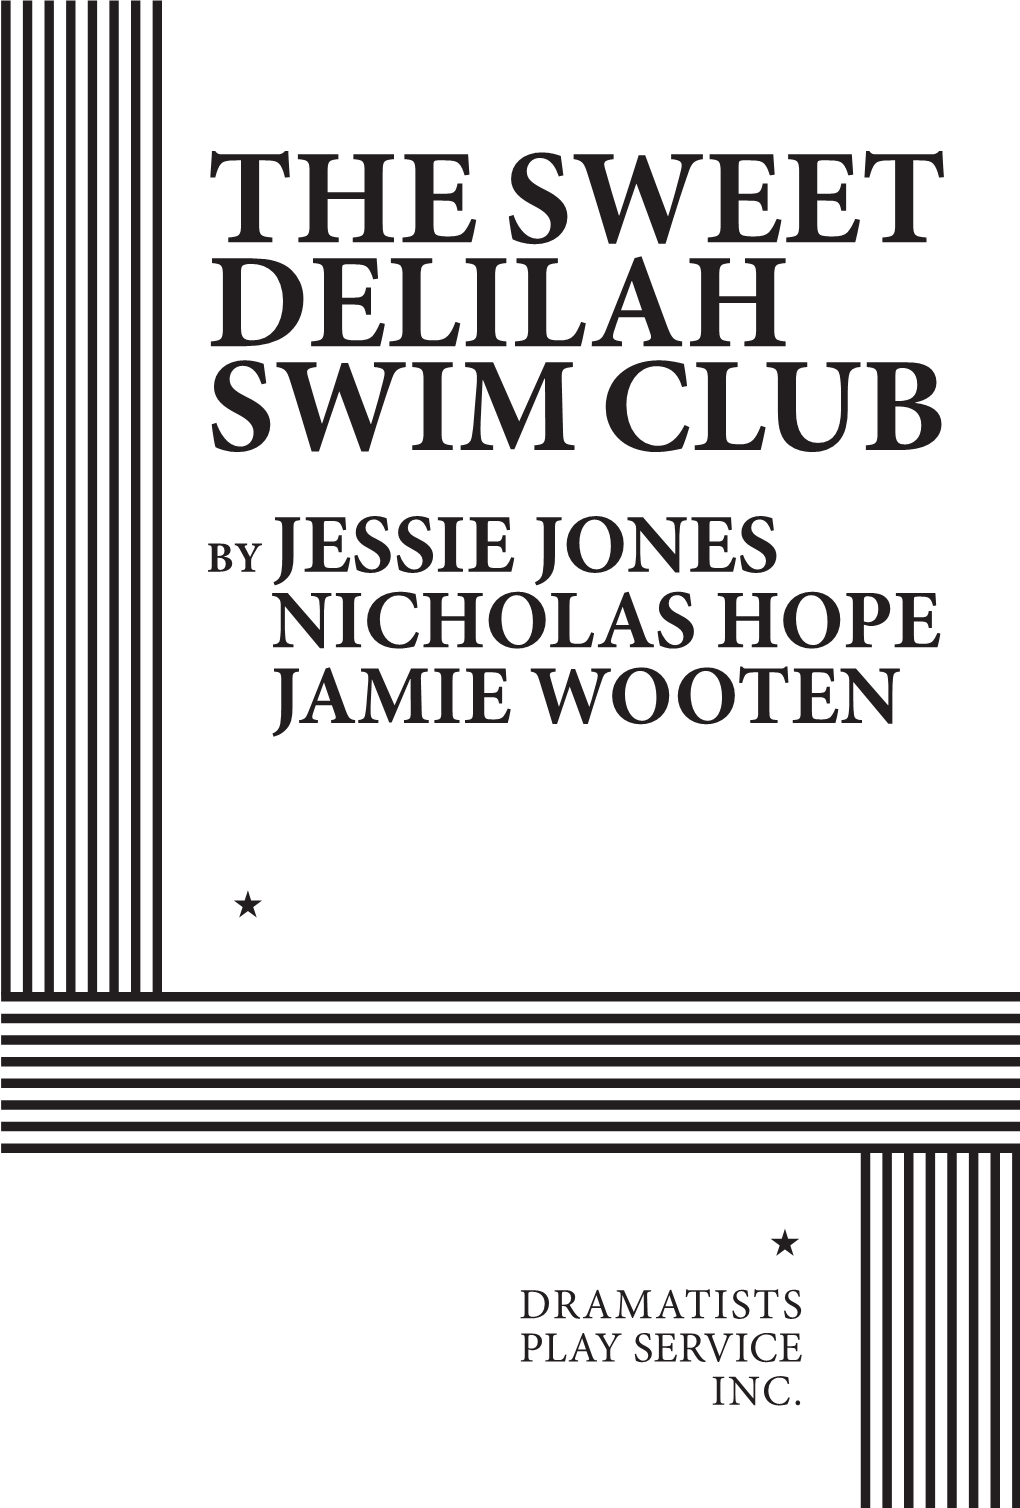 The Sweet Delilah Swim Club